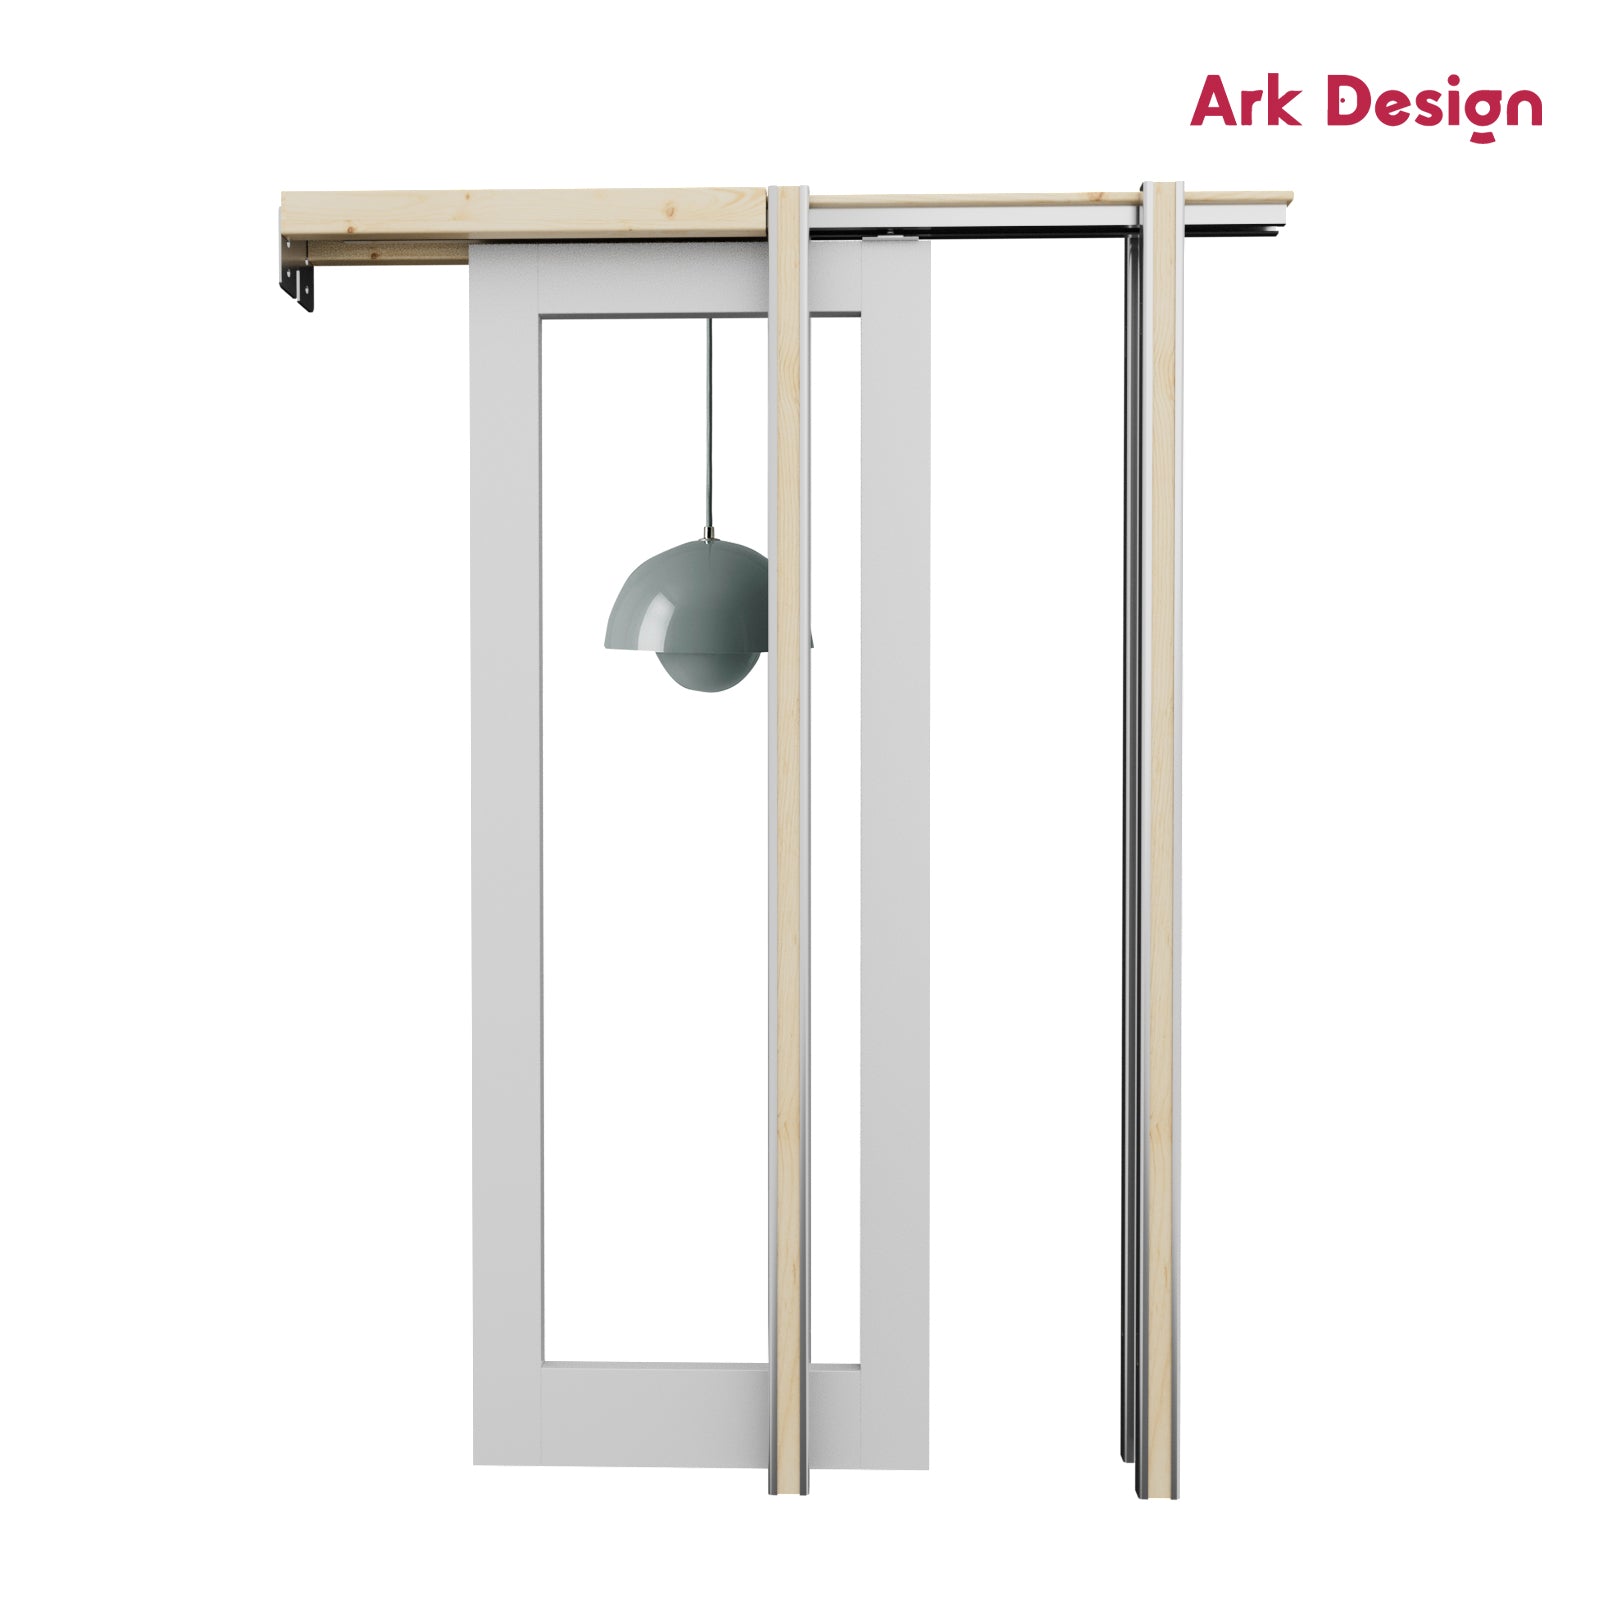 Ark Design 1-Lite Mirror Pocket Door with Hardware Kit & Frame, Solid Core MDF Wood & Paint-grade Finished, White